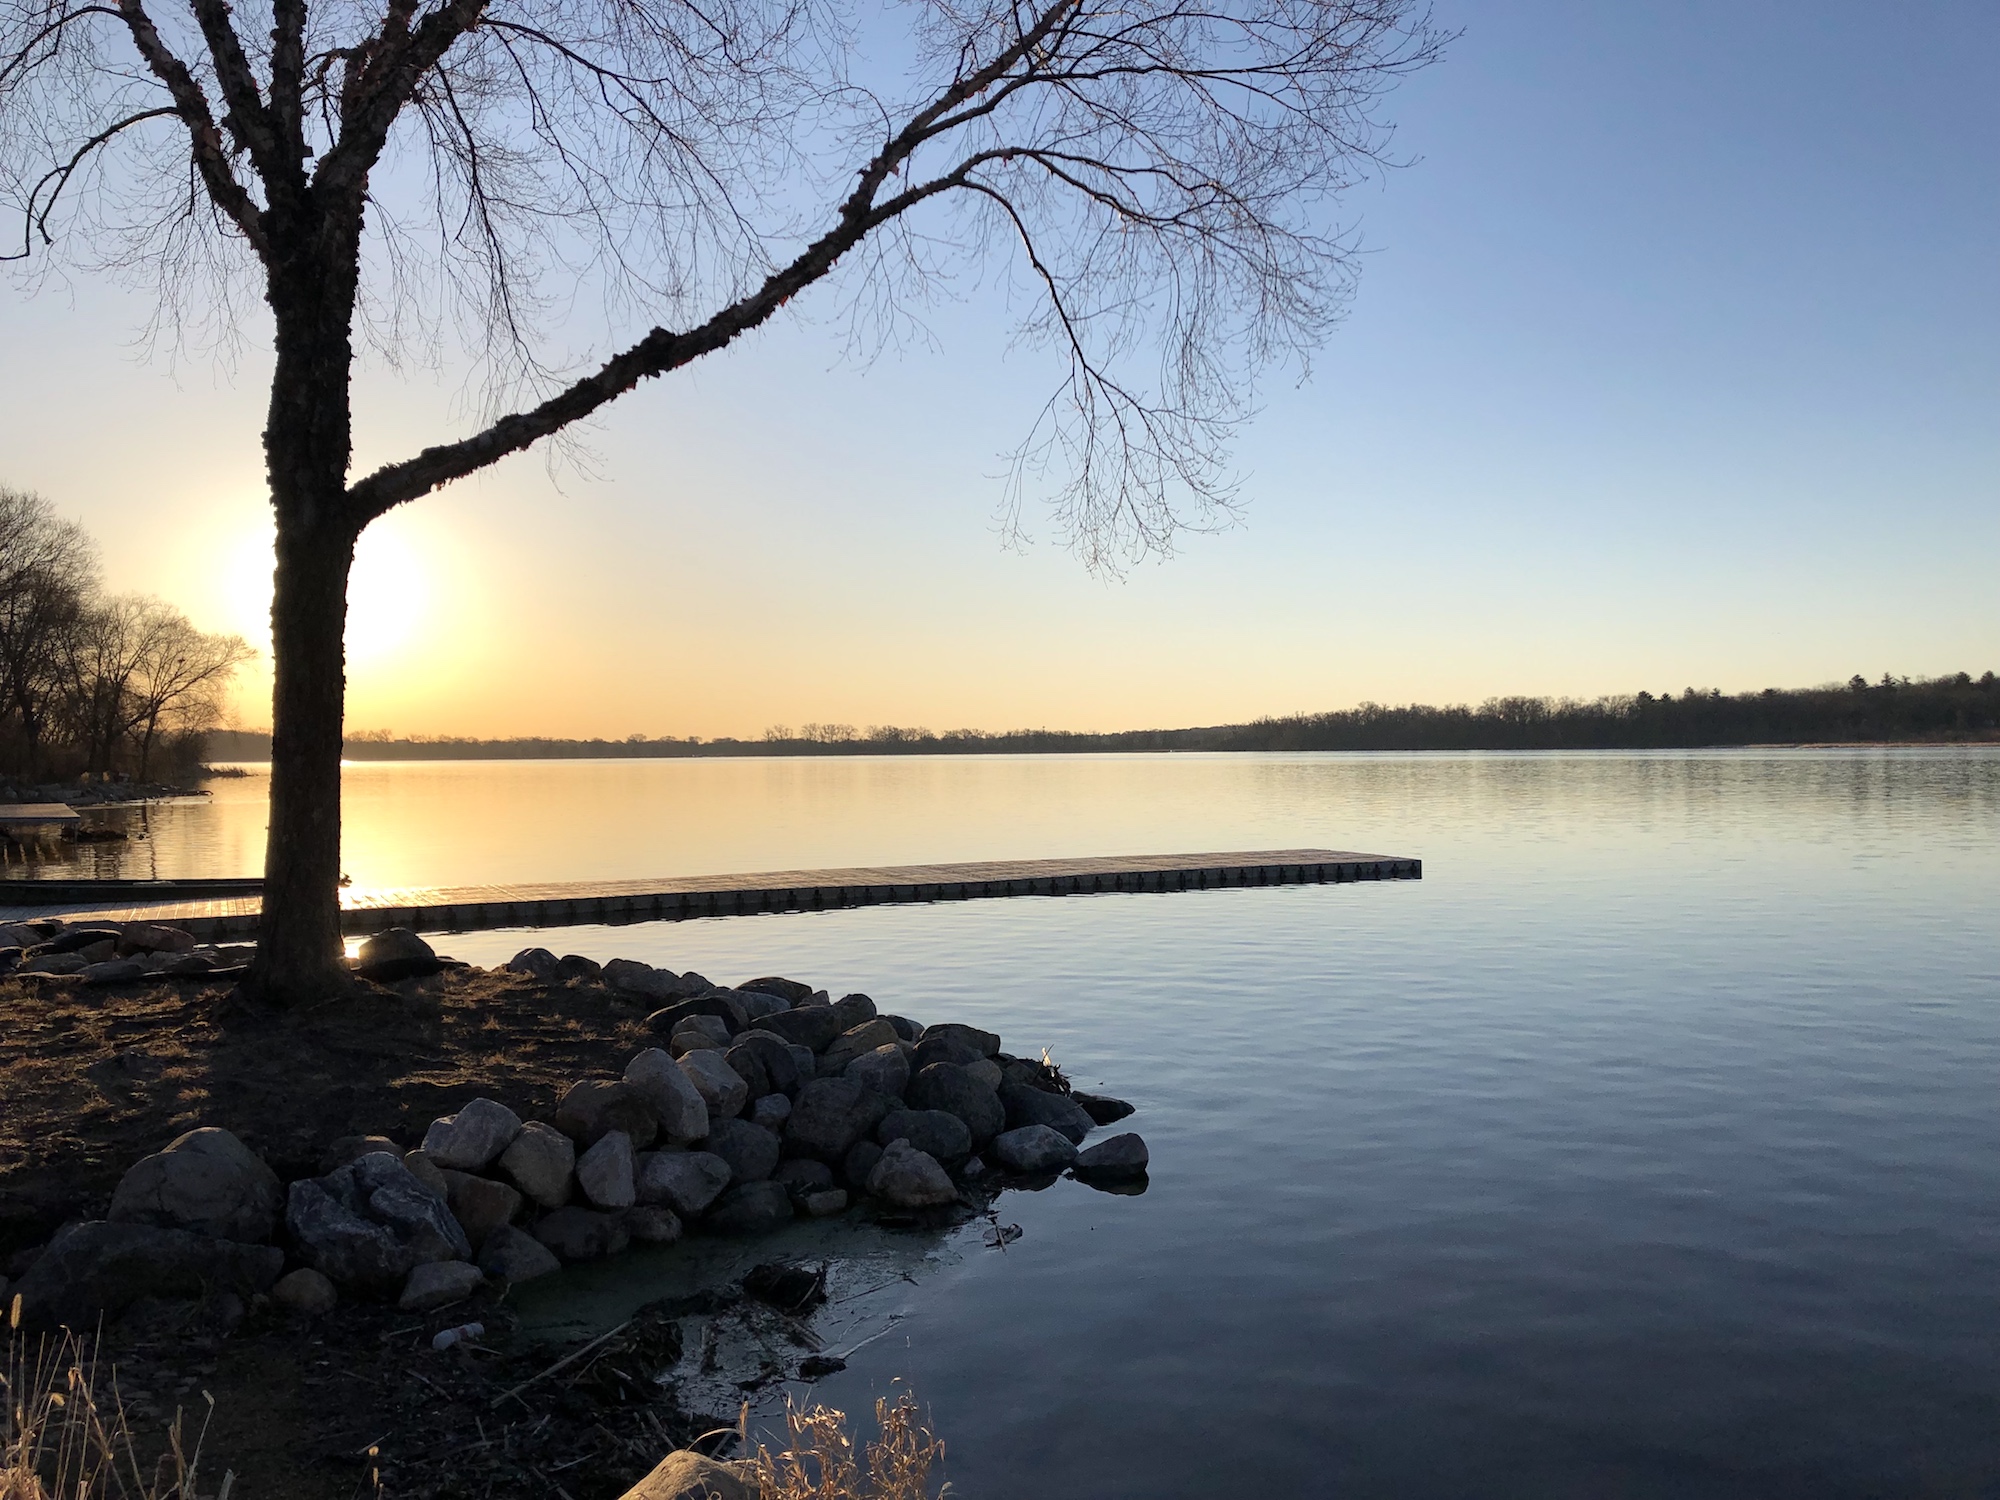 Lake Wingra on April 3, 2019.